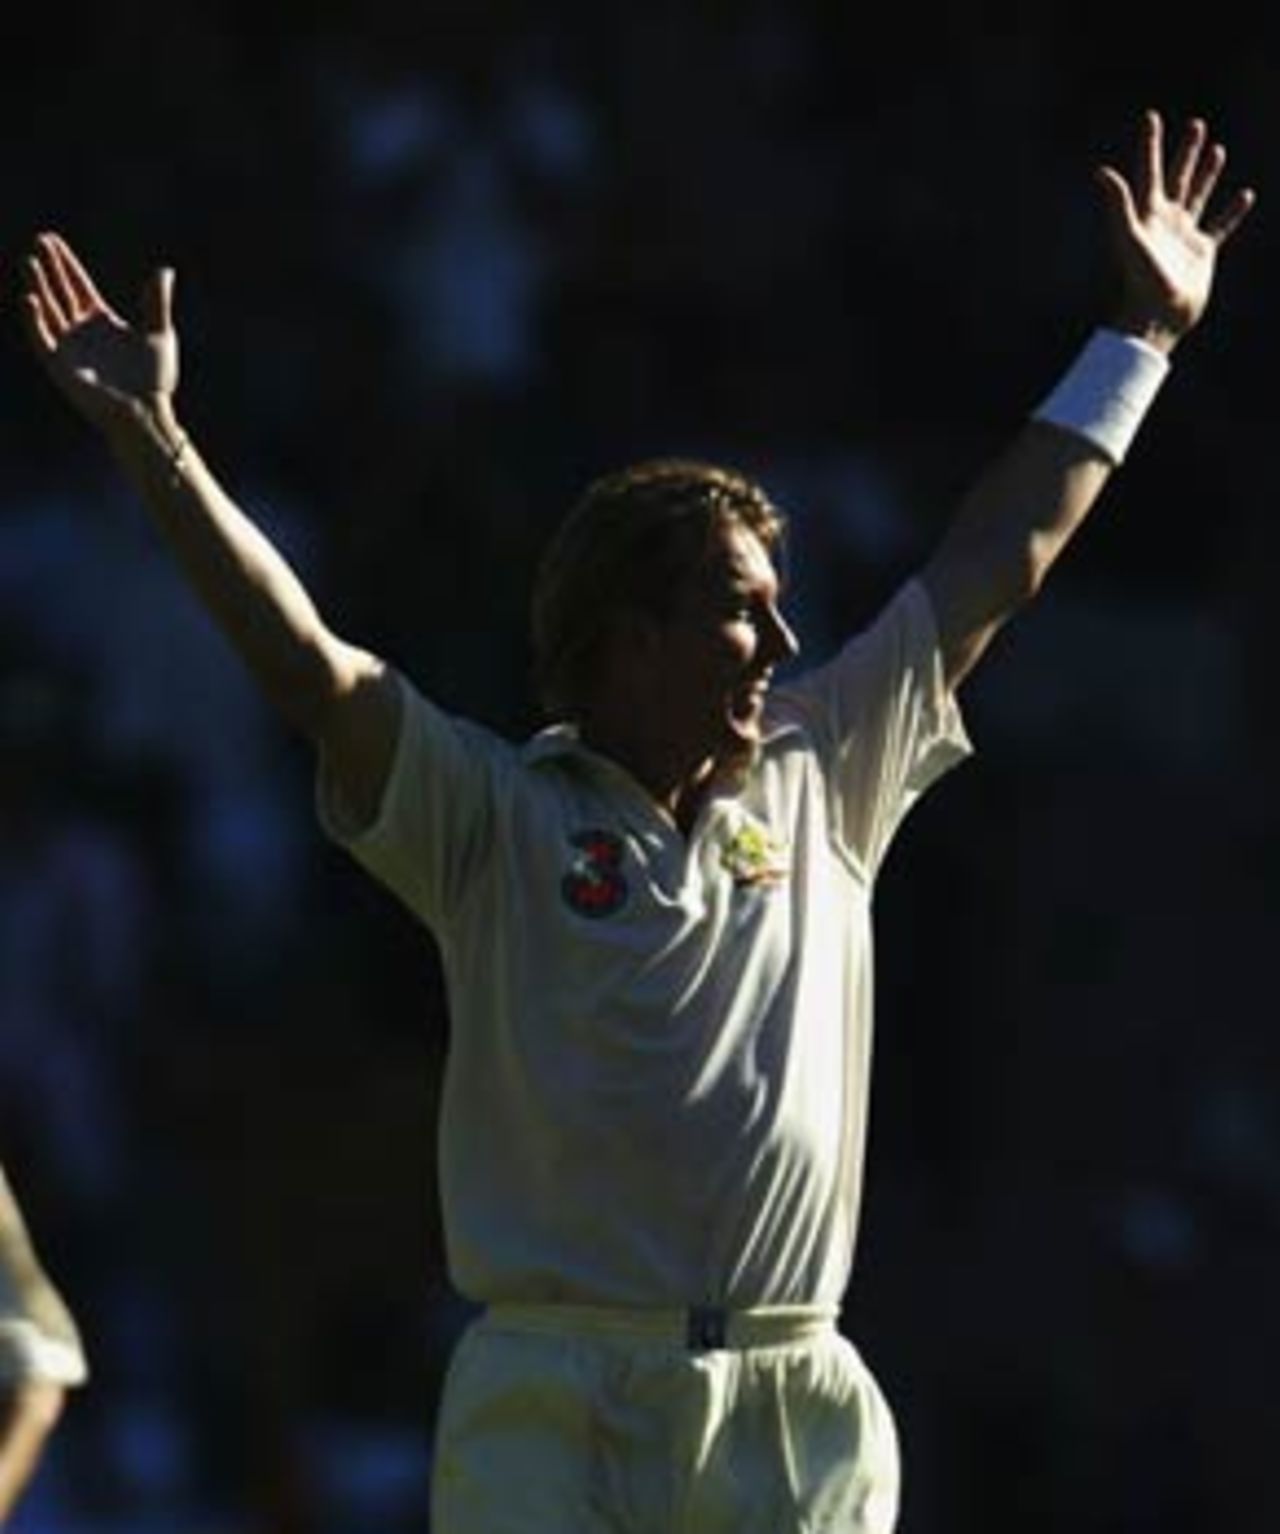 And knocked over Virender Sehwag, Australia v India, 3rd Test, Melbourne, 3rd day, December 28, 2003